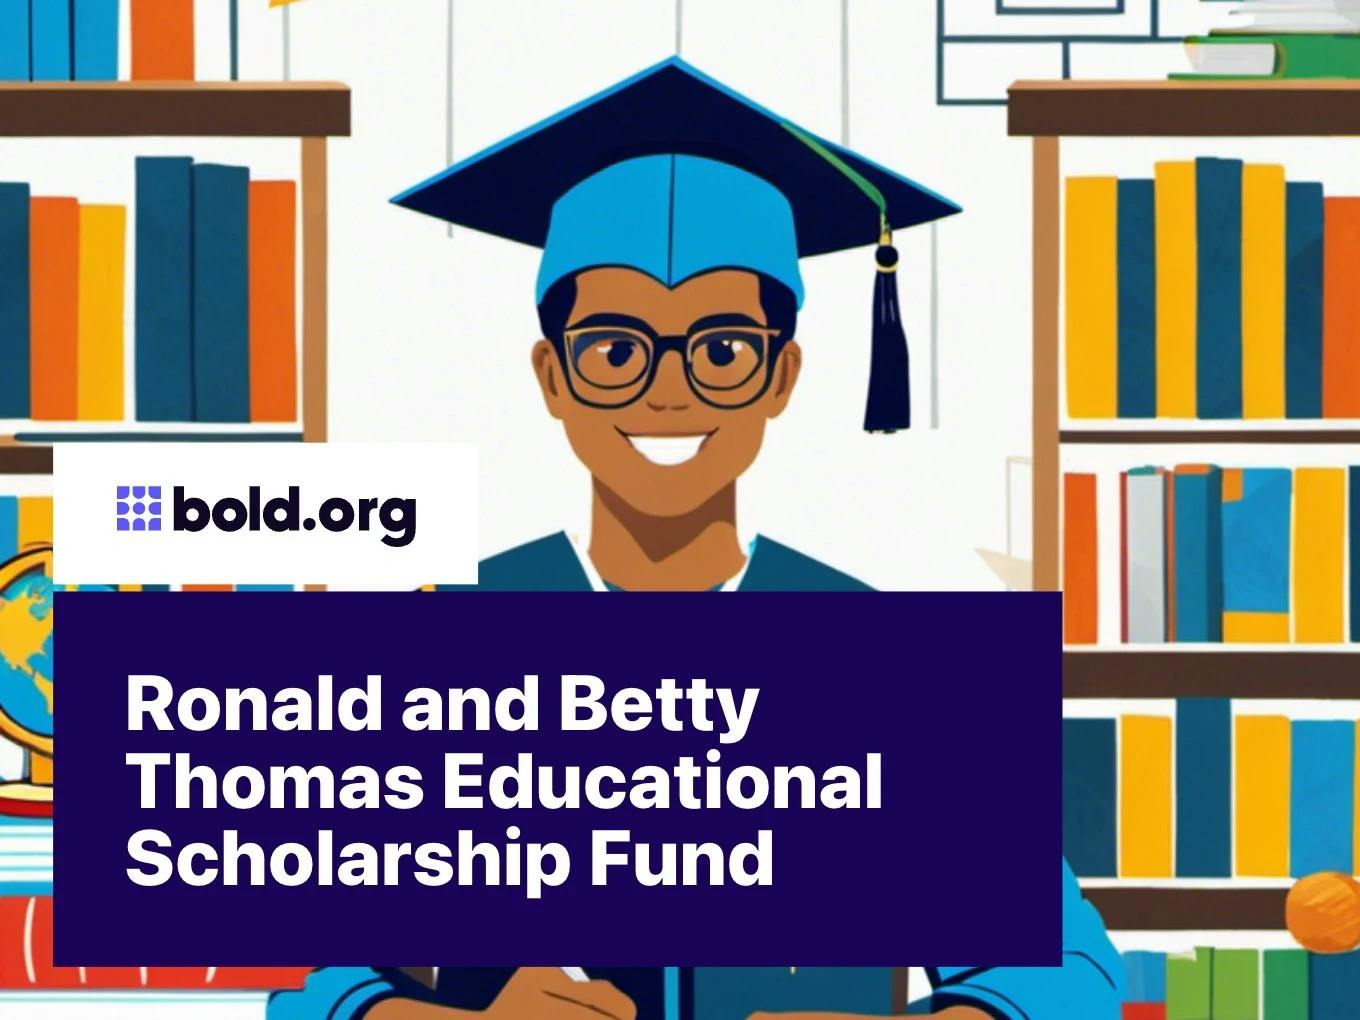 Ronald and Betty Thomas Educational Scholarship Fund